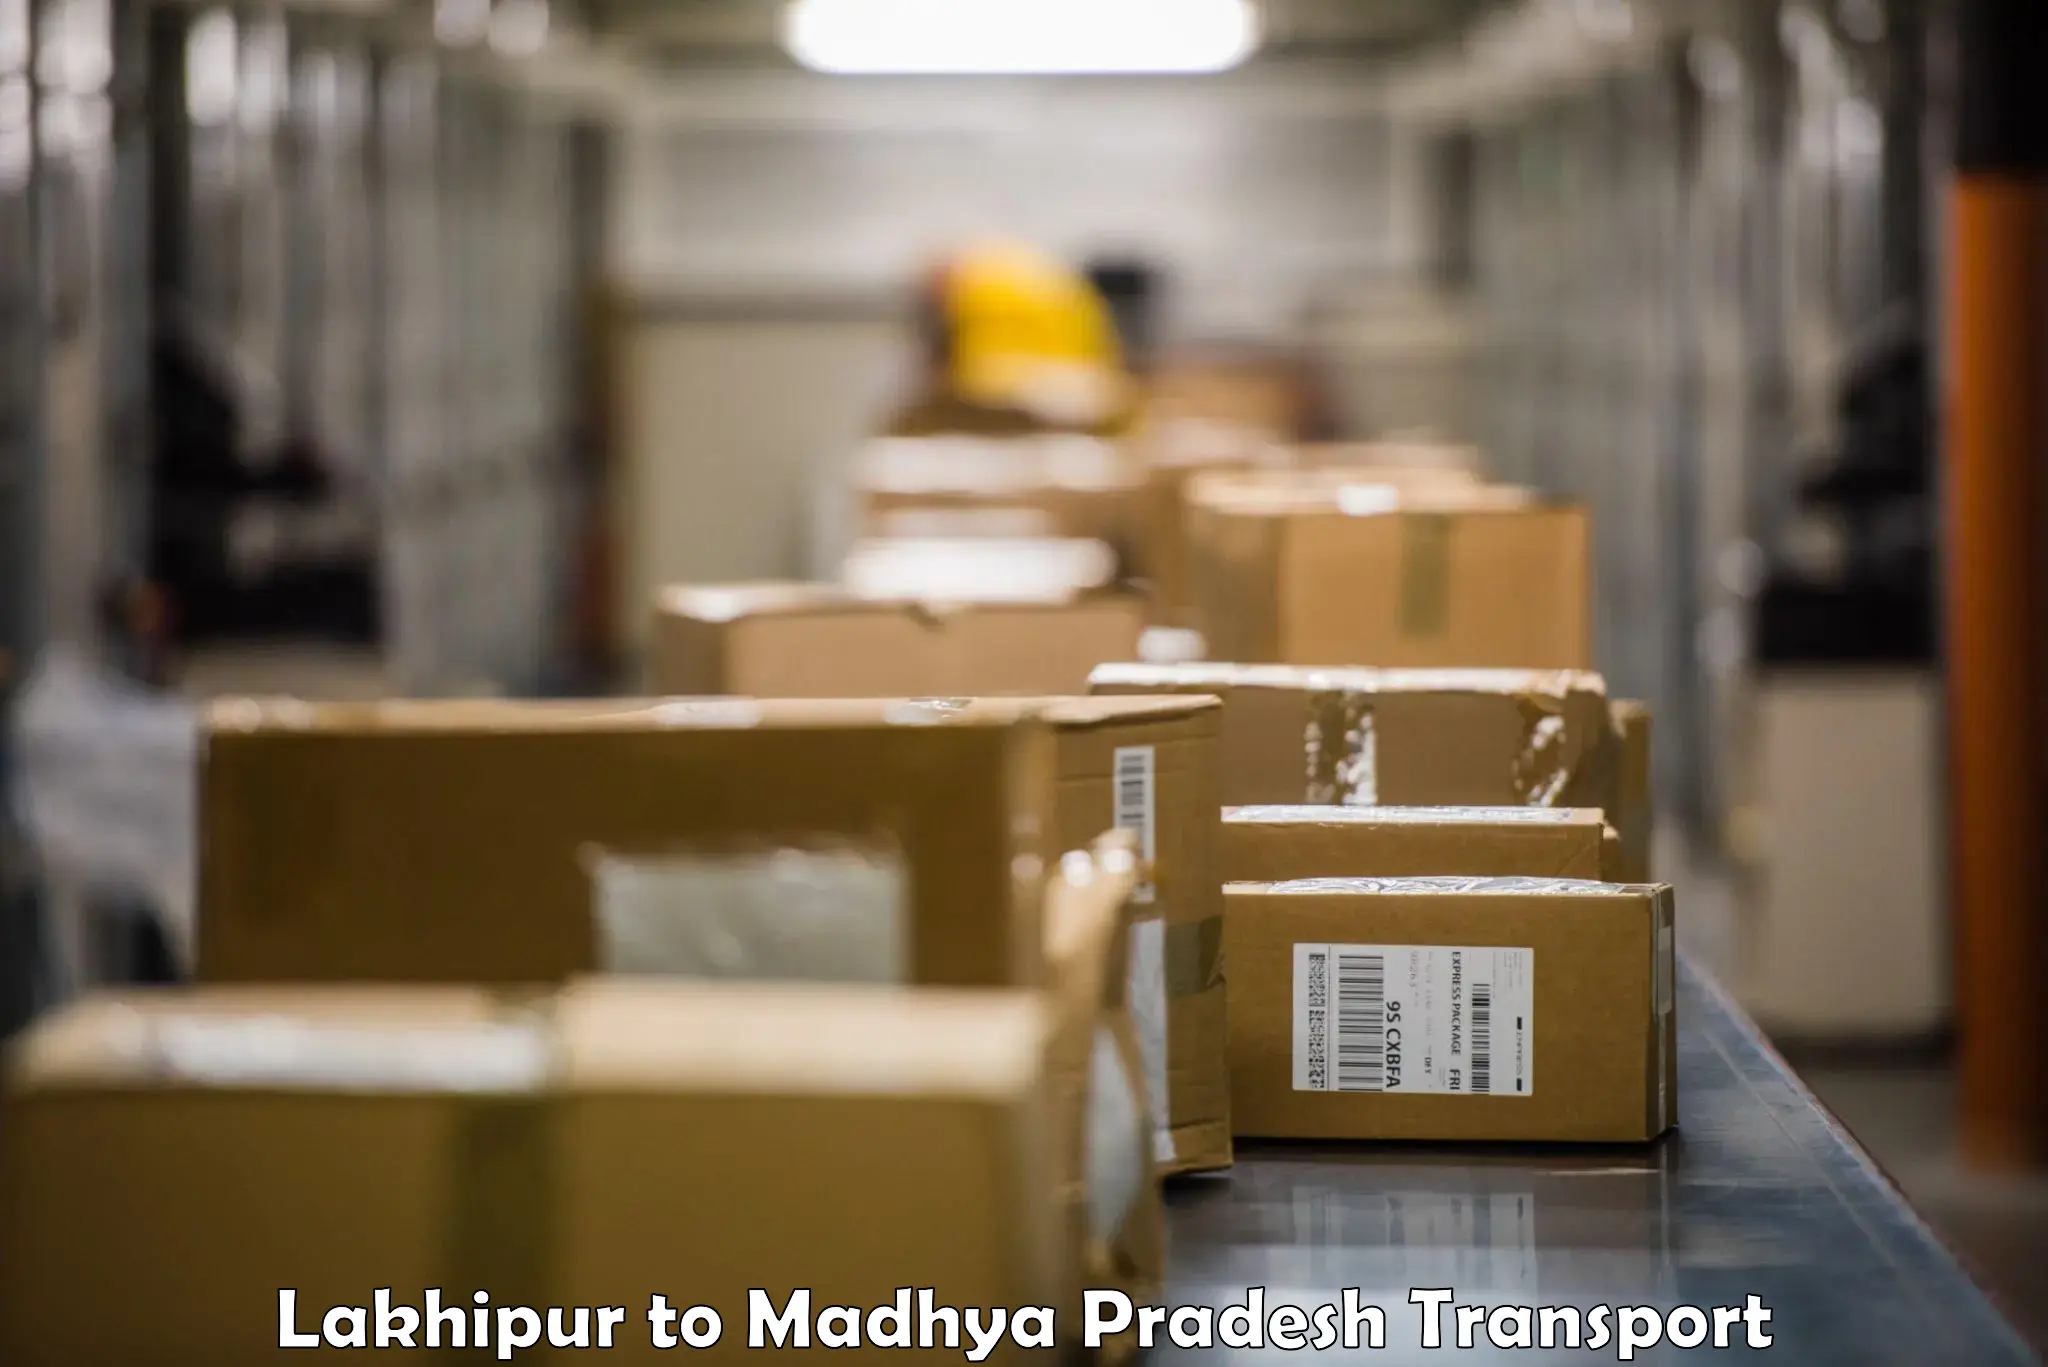 Truck transport companies in India Lakhipur to Sendhwa